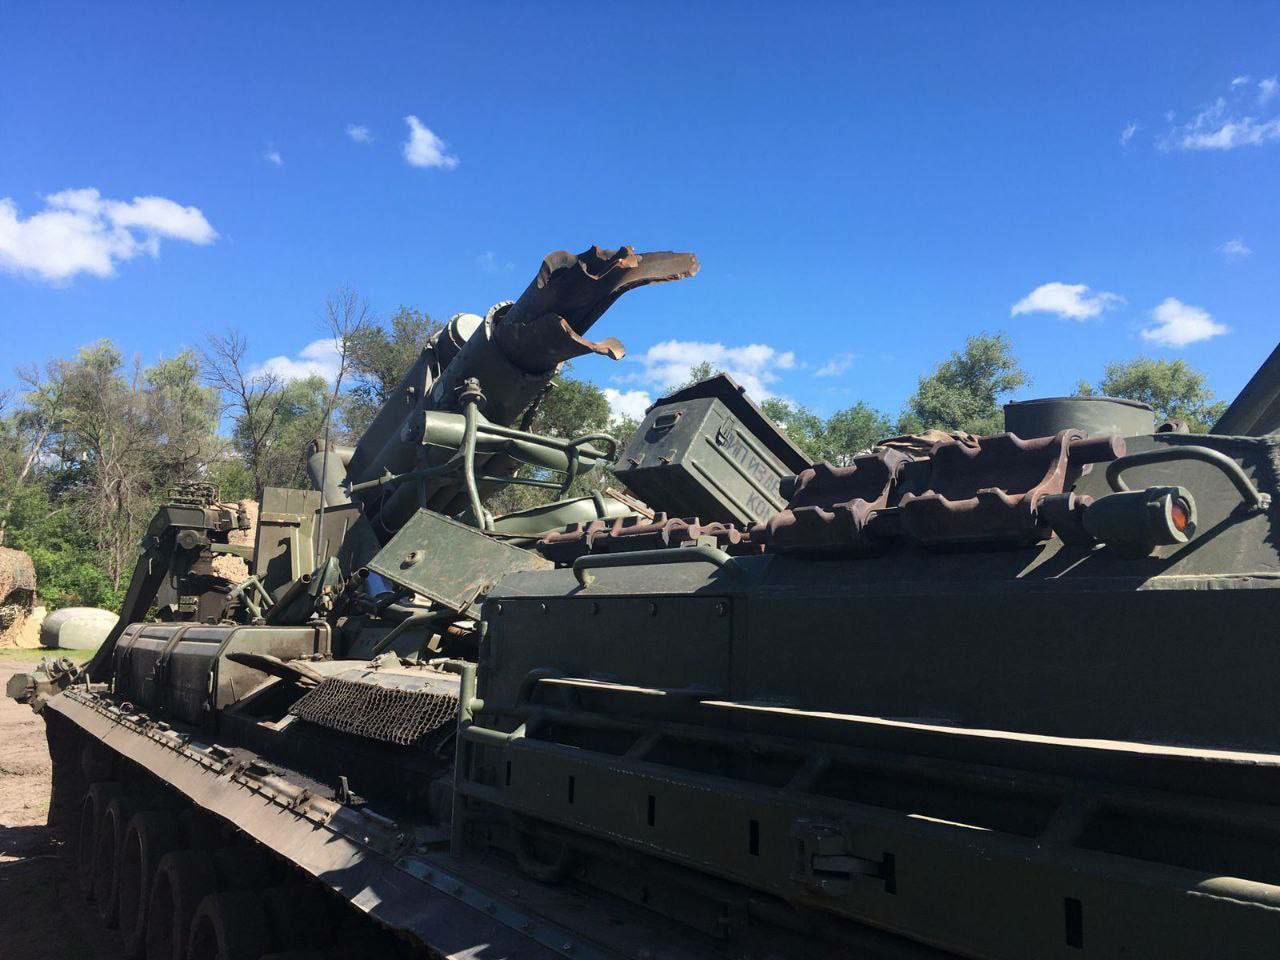 The barrel rupture on the Malka self-propelled artillery, Defense Express